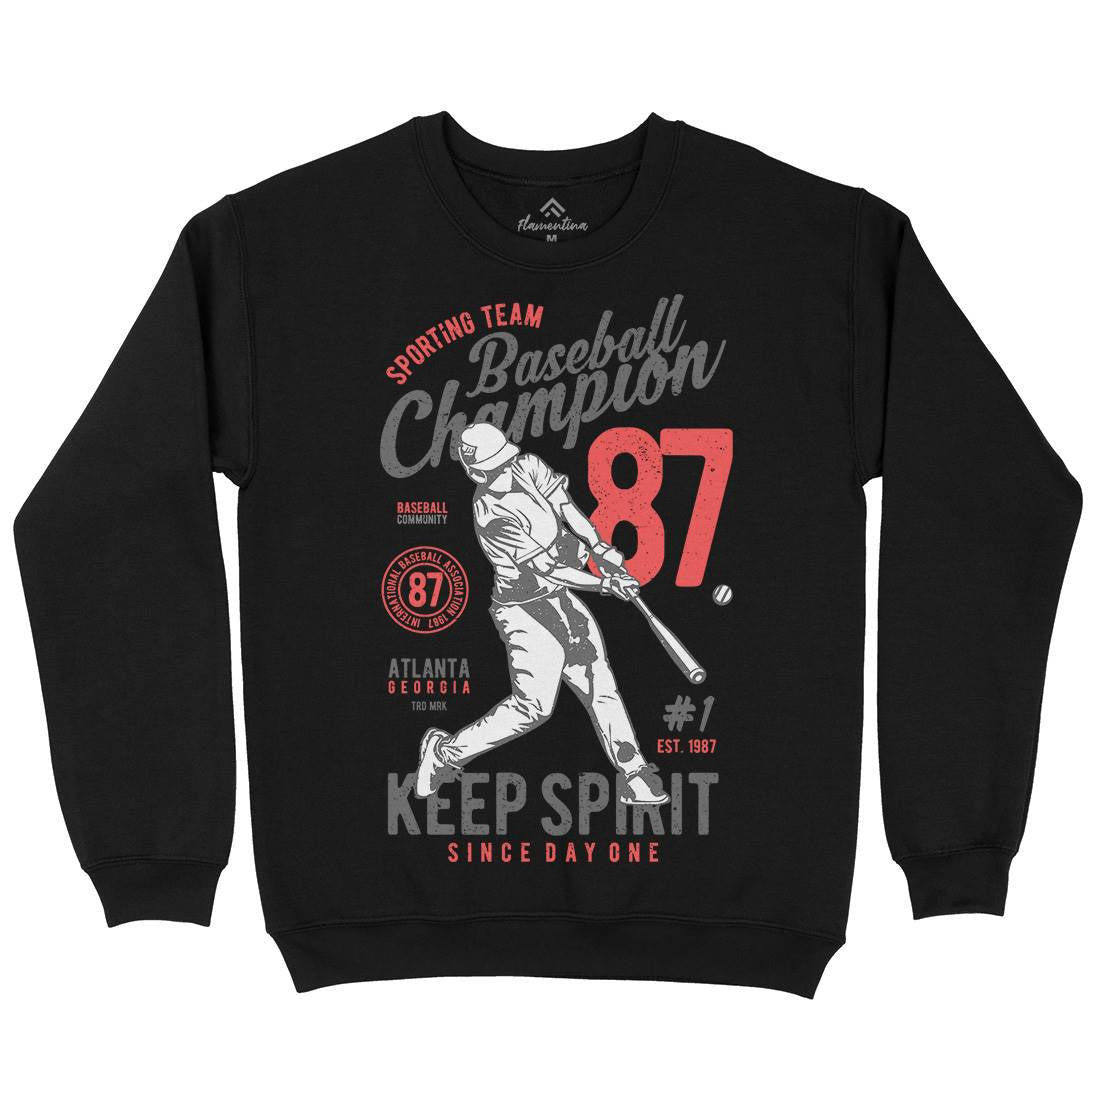 Baseball Champion Kids Crew Neck Sweatshirt Sport A616